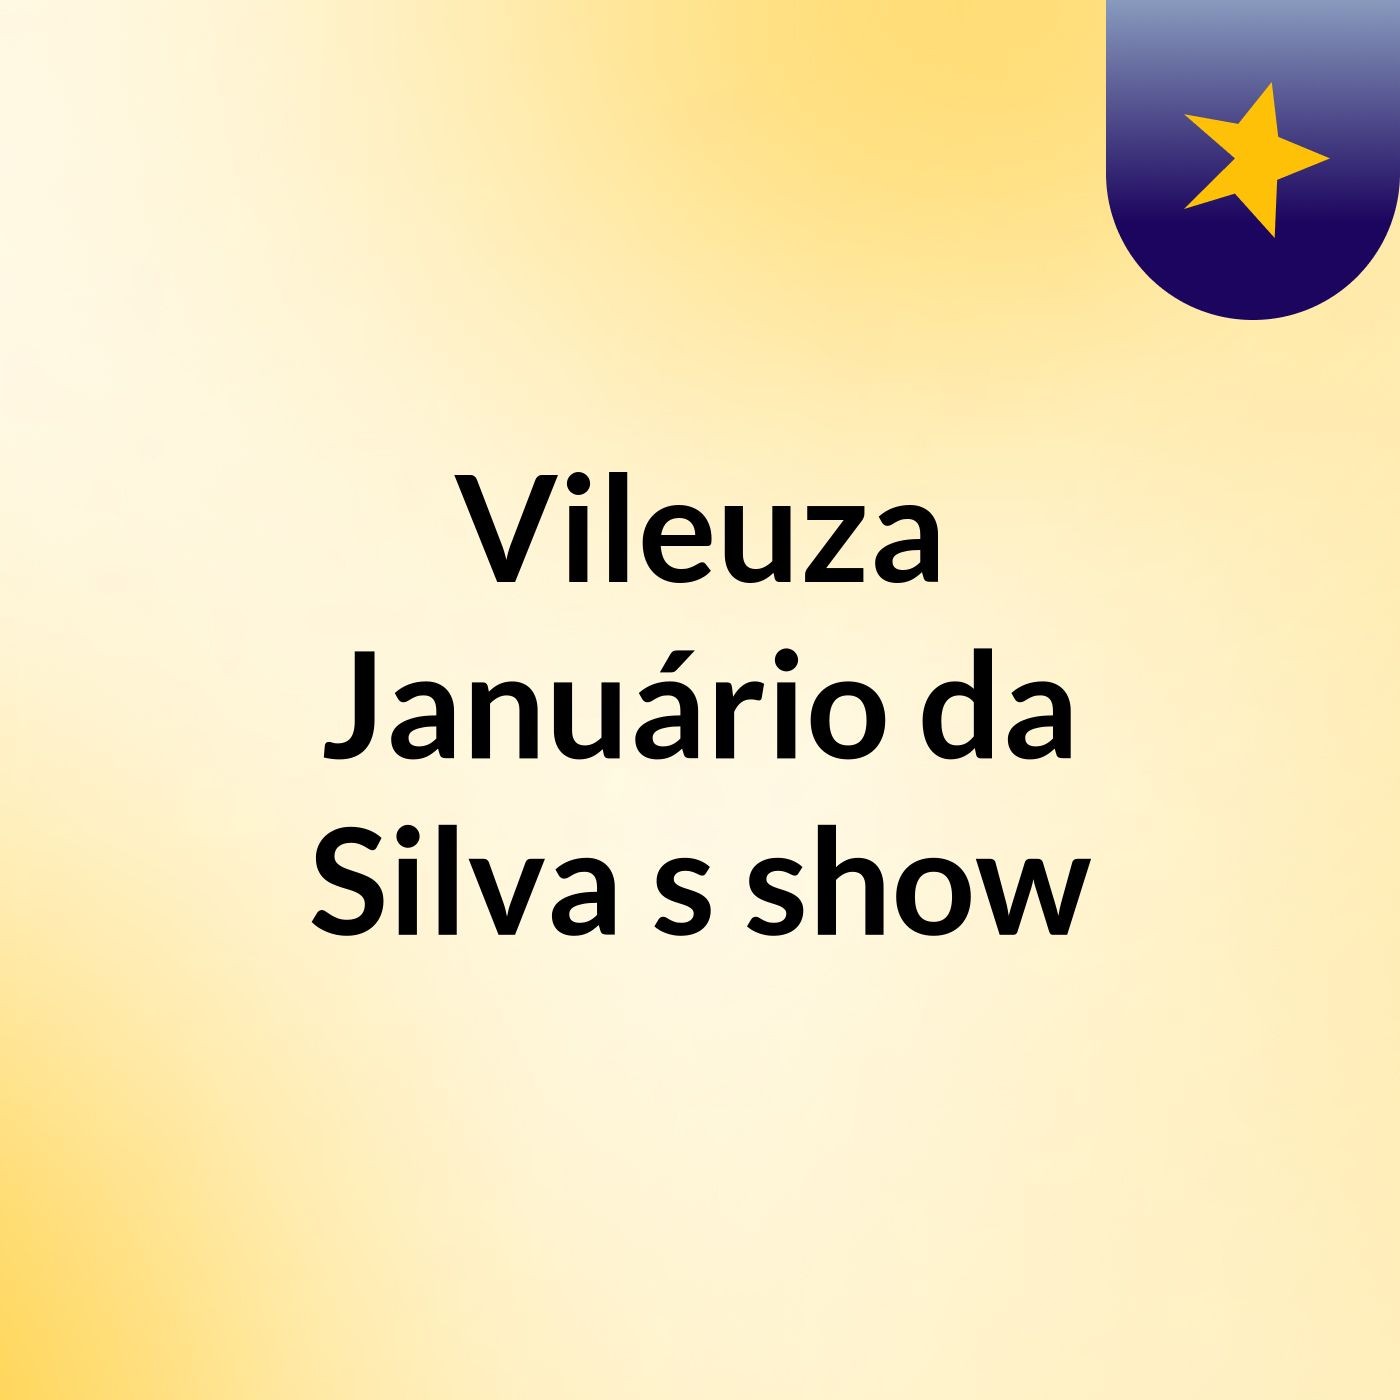 Vileuza Januário da Silva's show